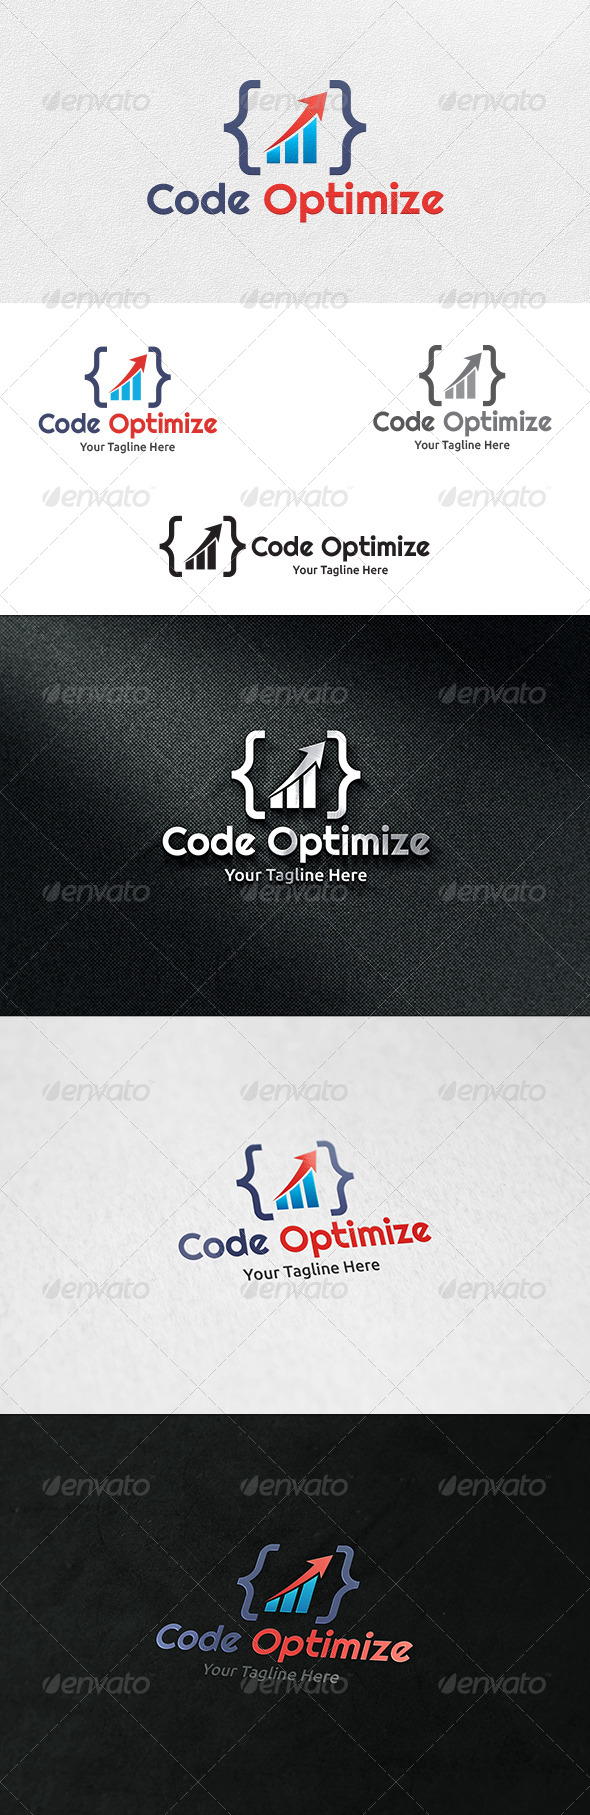 Code Optimize - Logo Template